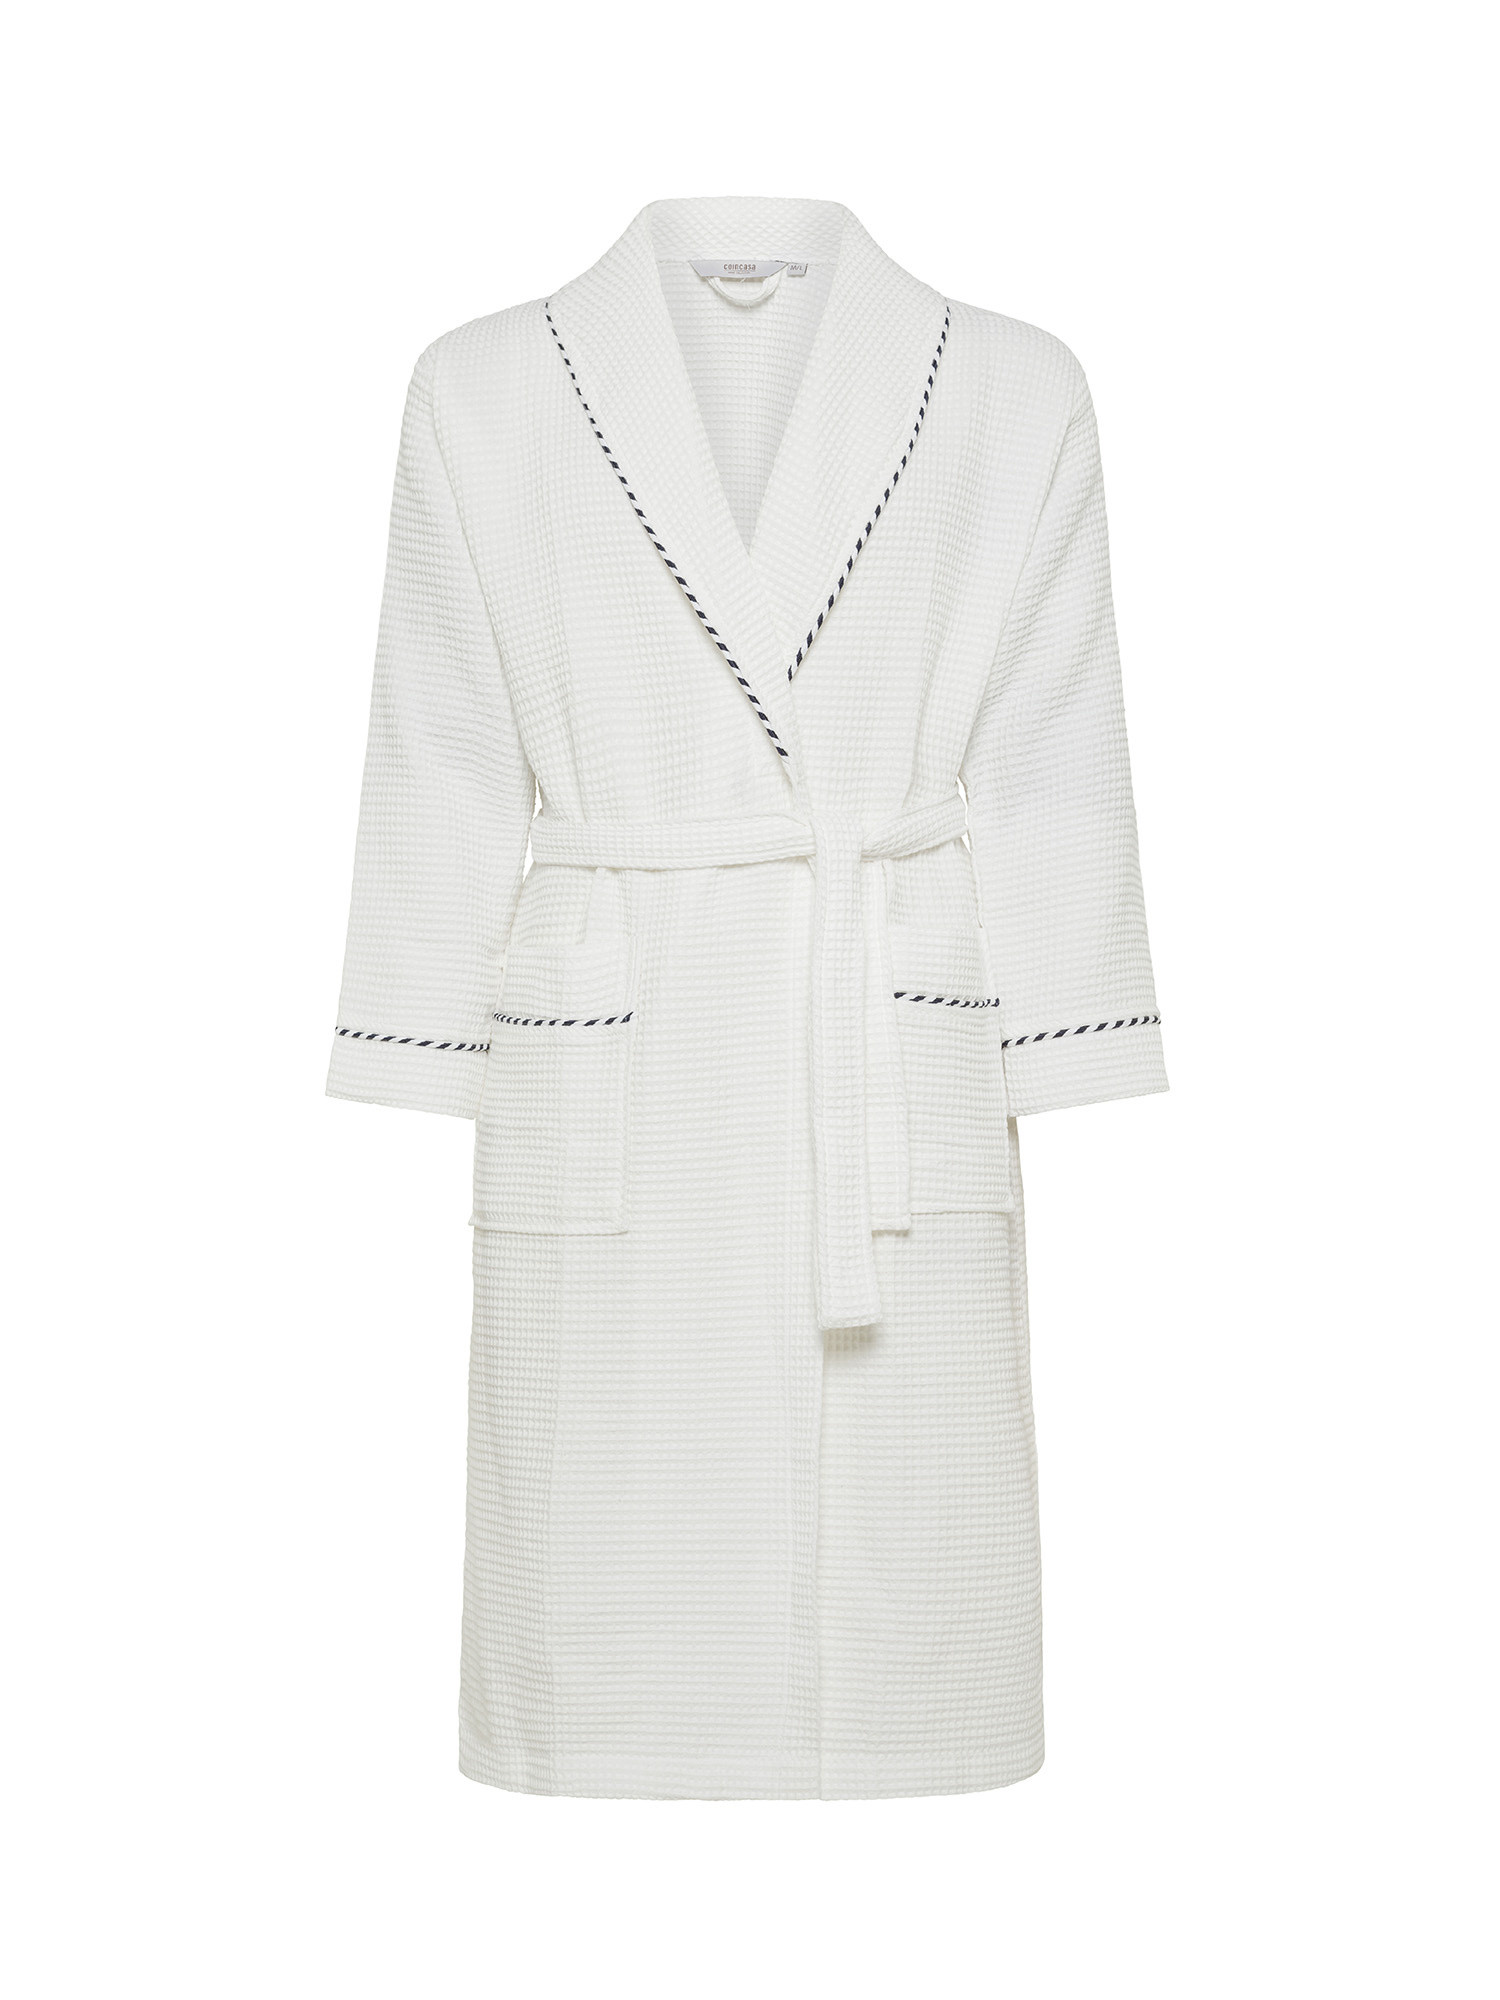 Piqué cotton bathrobe, White, large image number 0